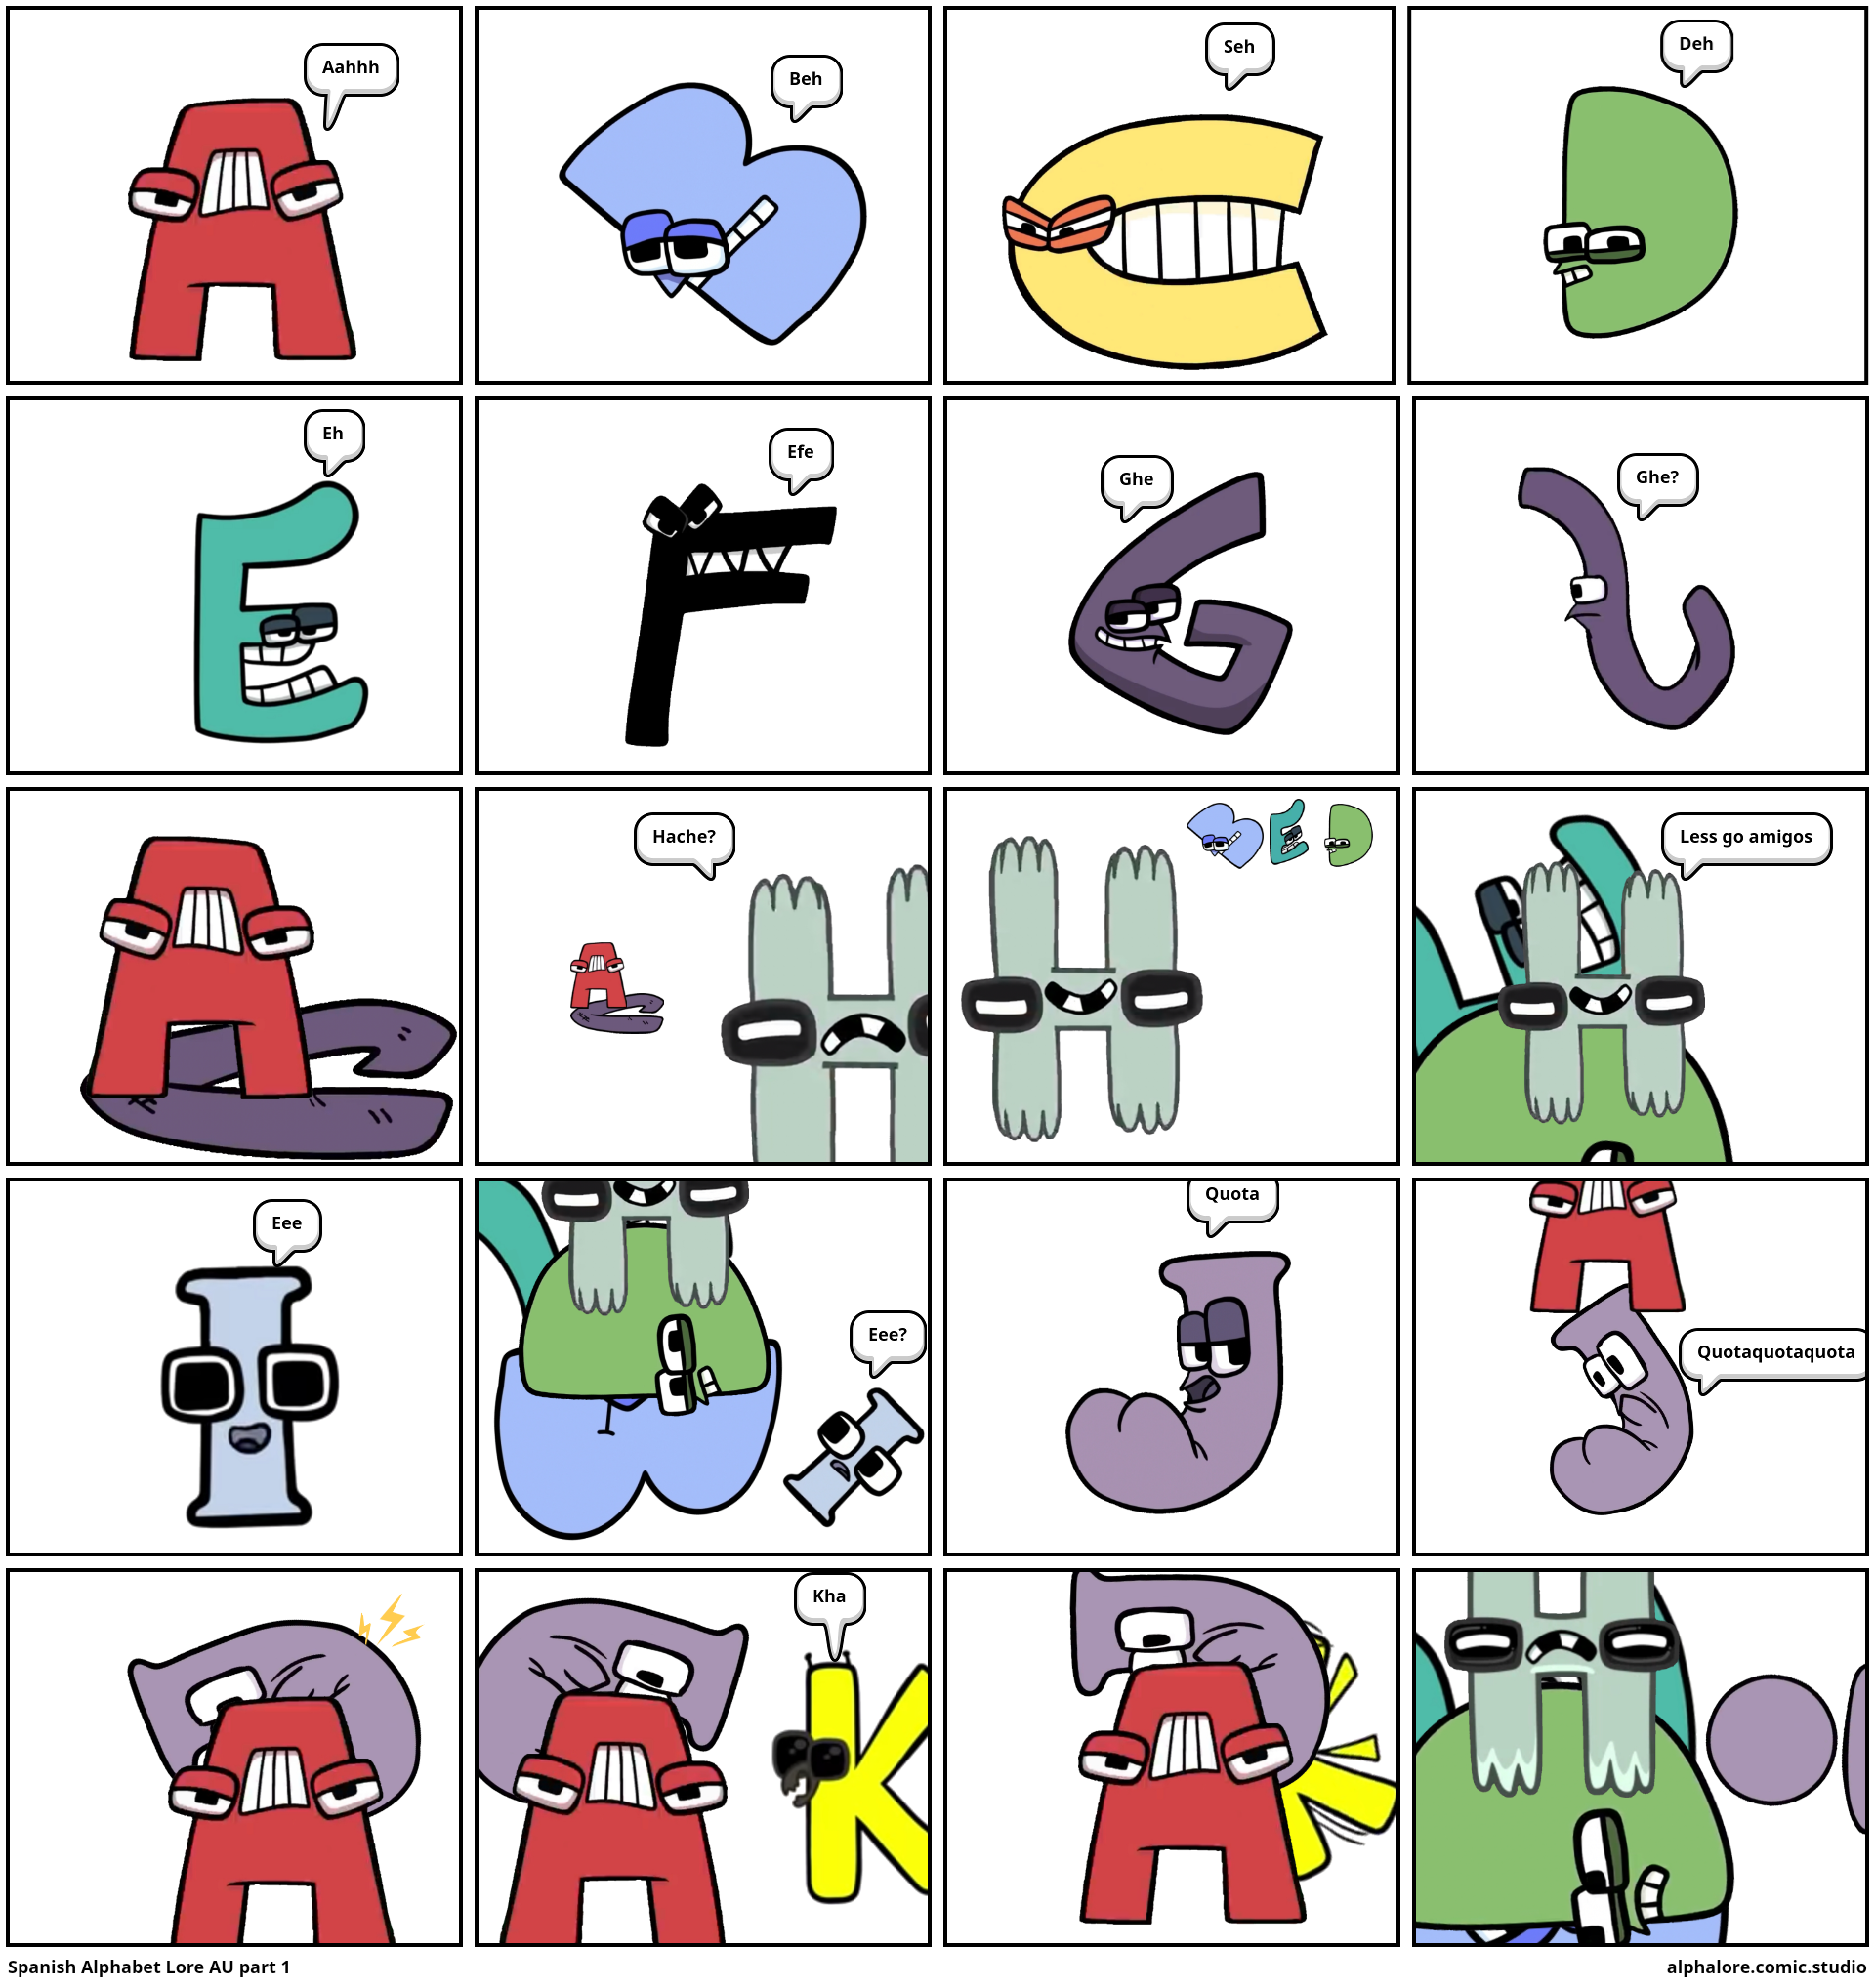 Alphabet Lore Meets Spanish Alphabet Lore (Part 2) - Comic Studio